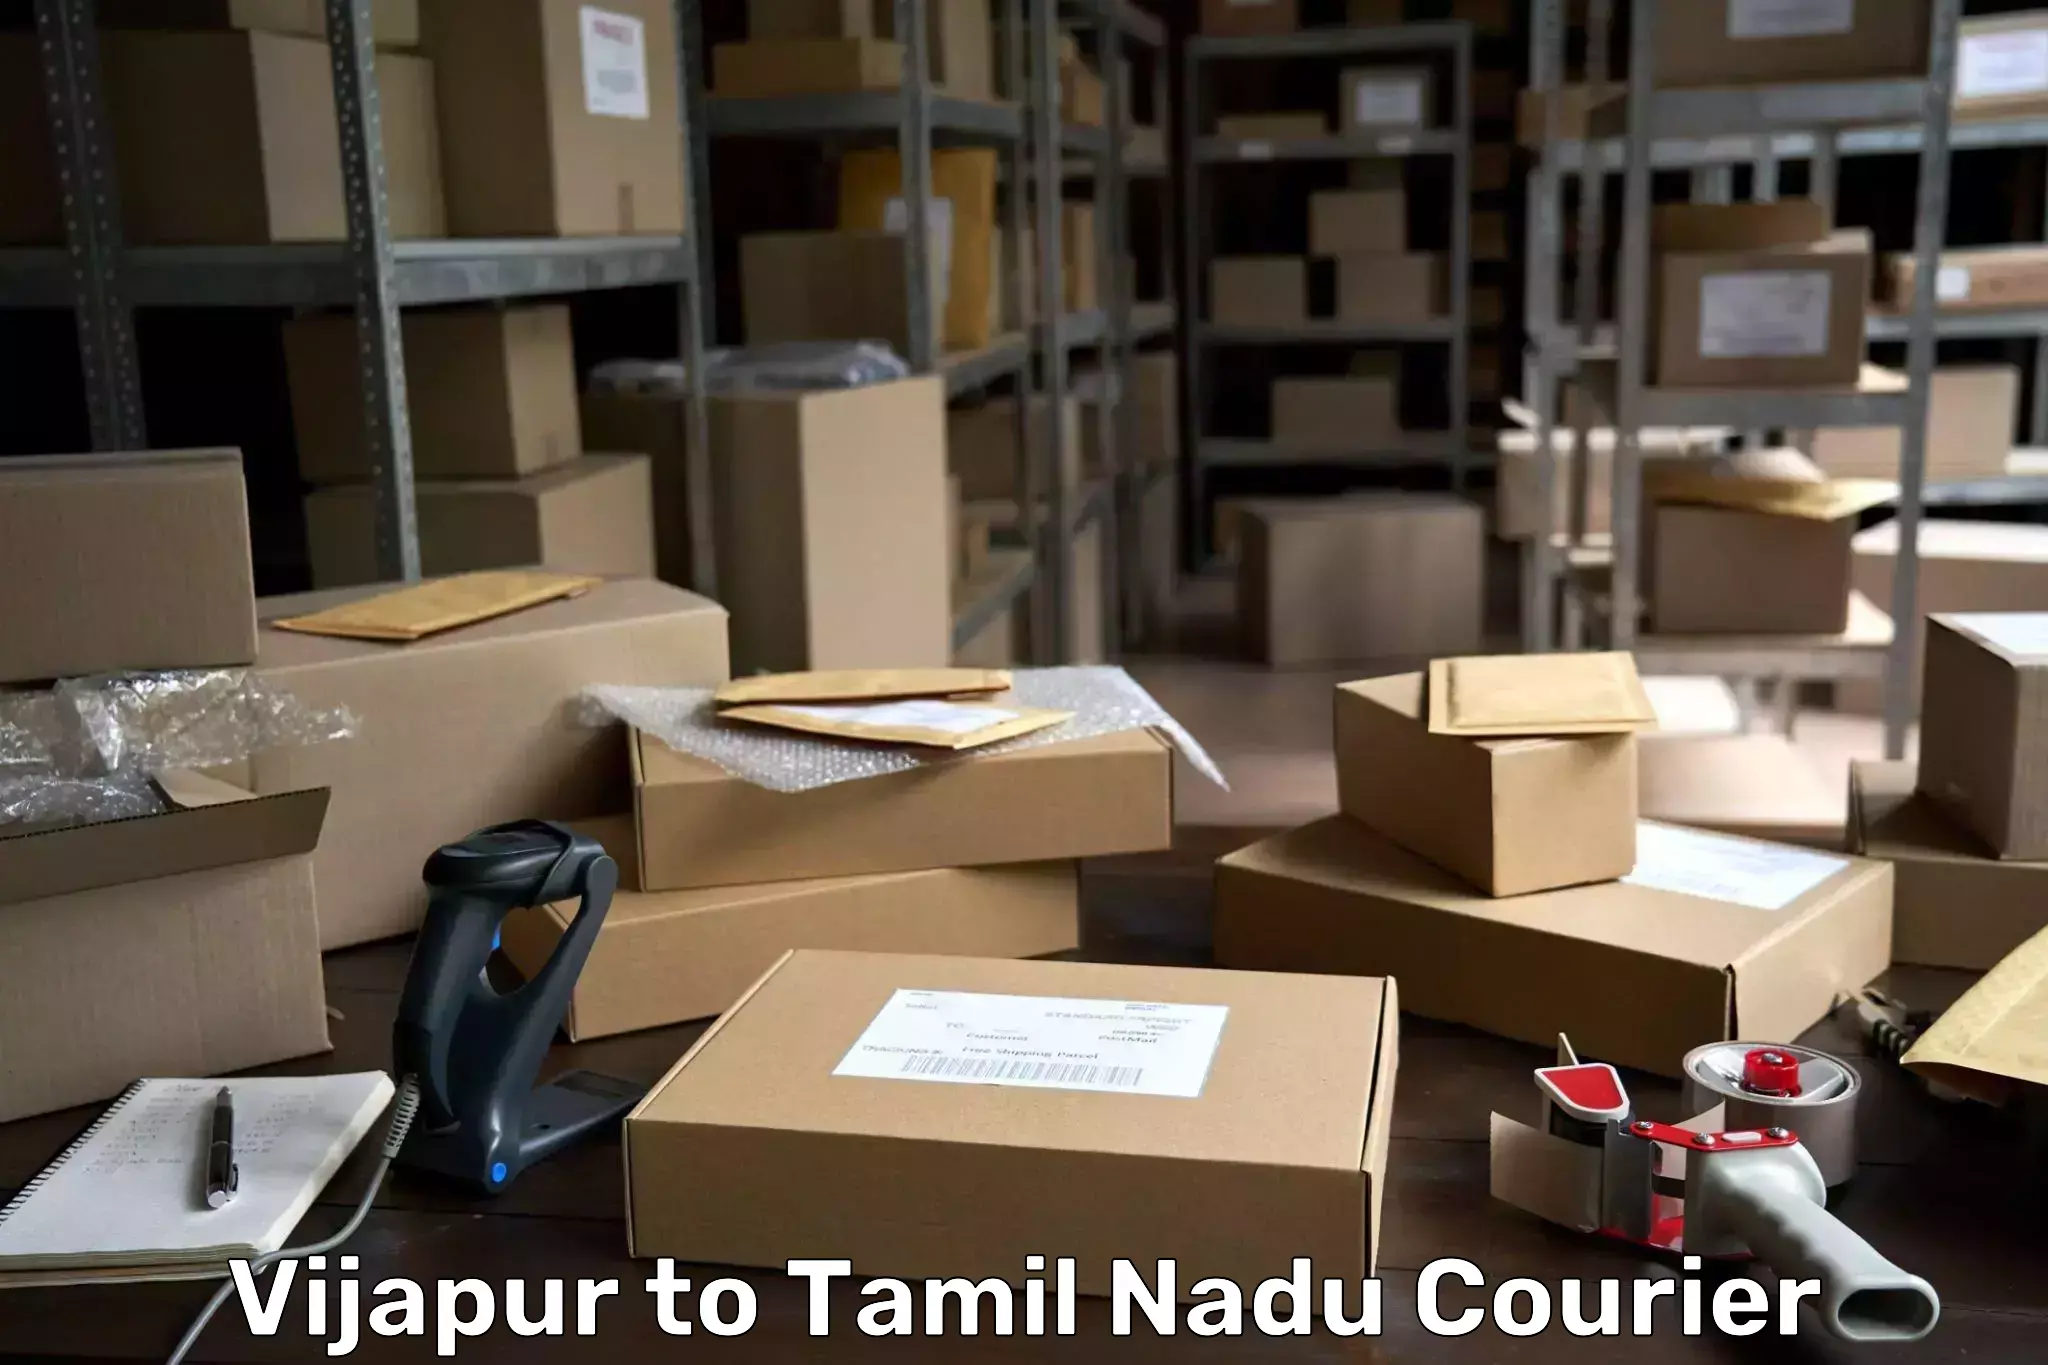 Doorstep delivery service Vijapur to Tamil Nadu